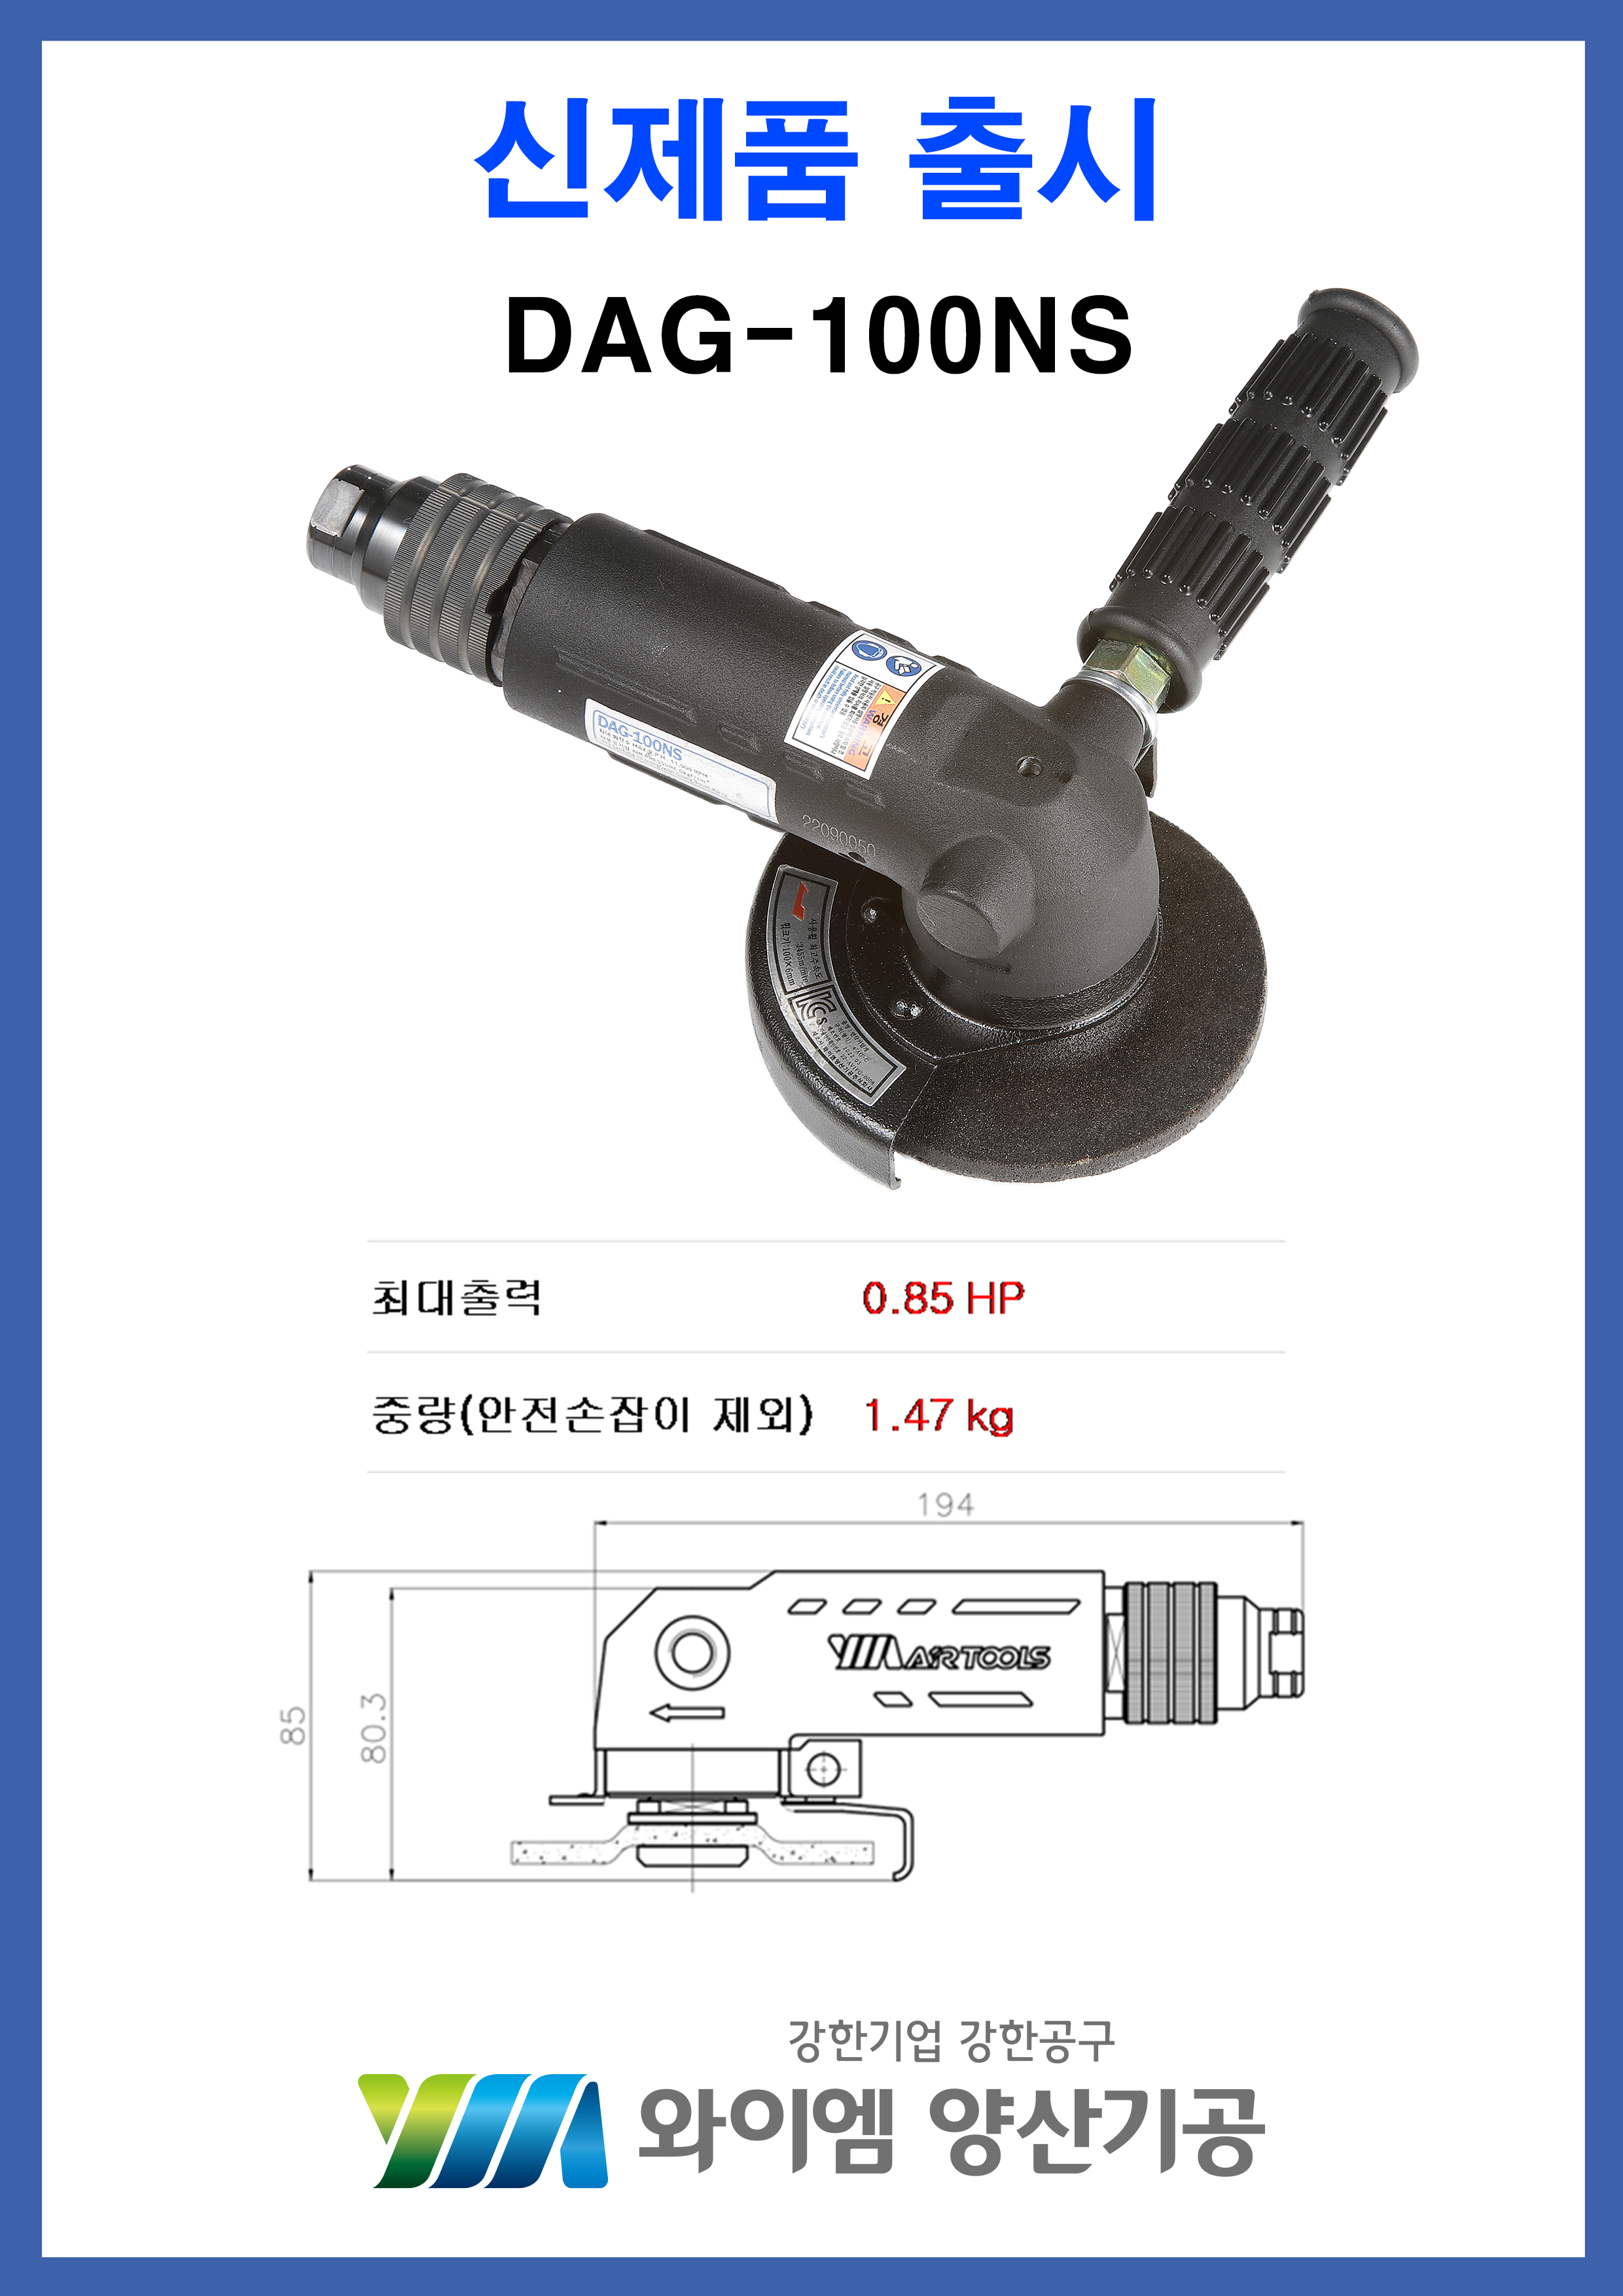 DAG-100NS